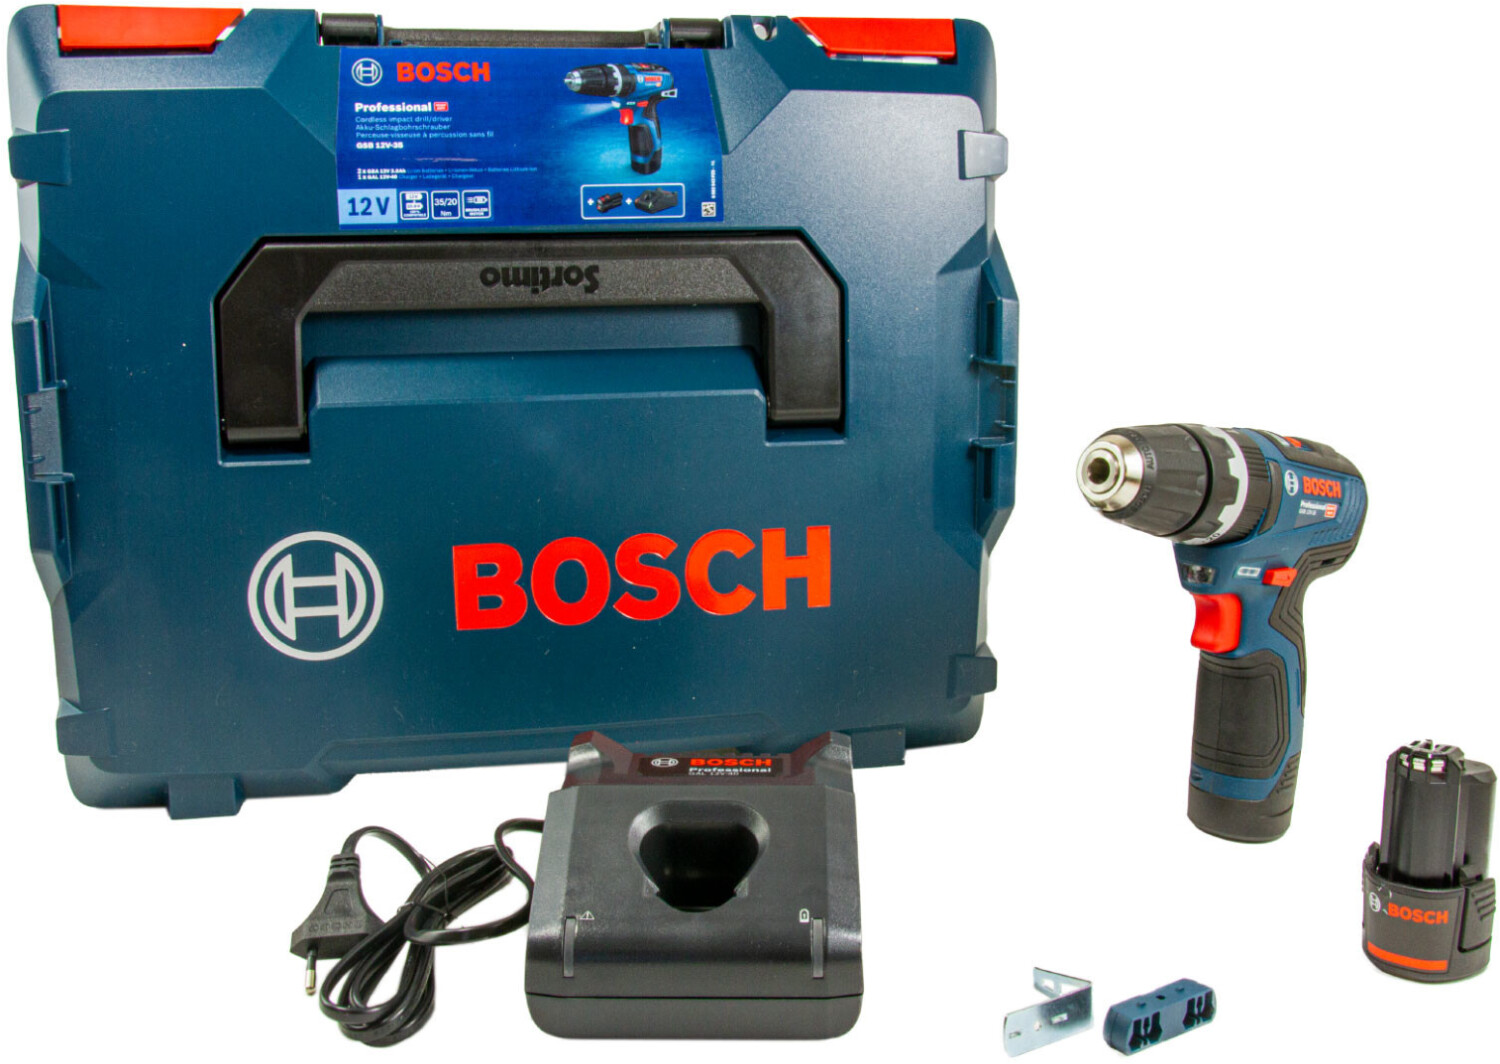 GSB Ladegerät 2 Bosch 12V-35 bei Ah + + 3.0 € Preisvergleich | L-Boxx 169,90 ab (06019J9000) x